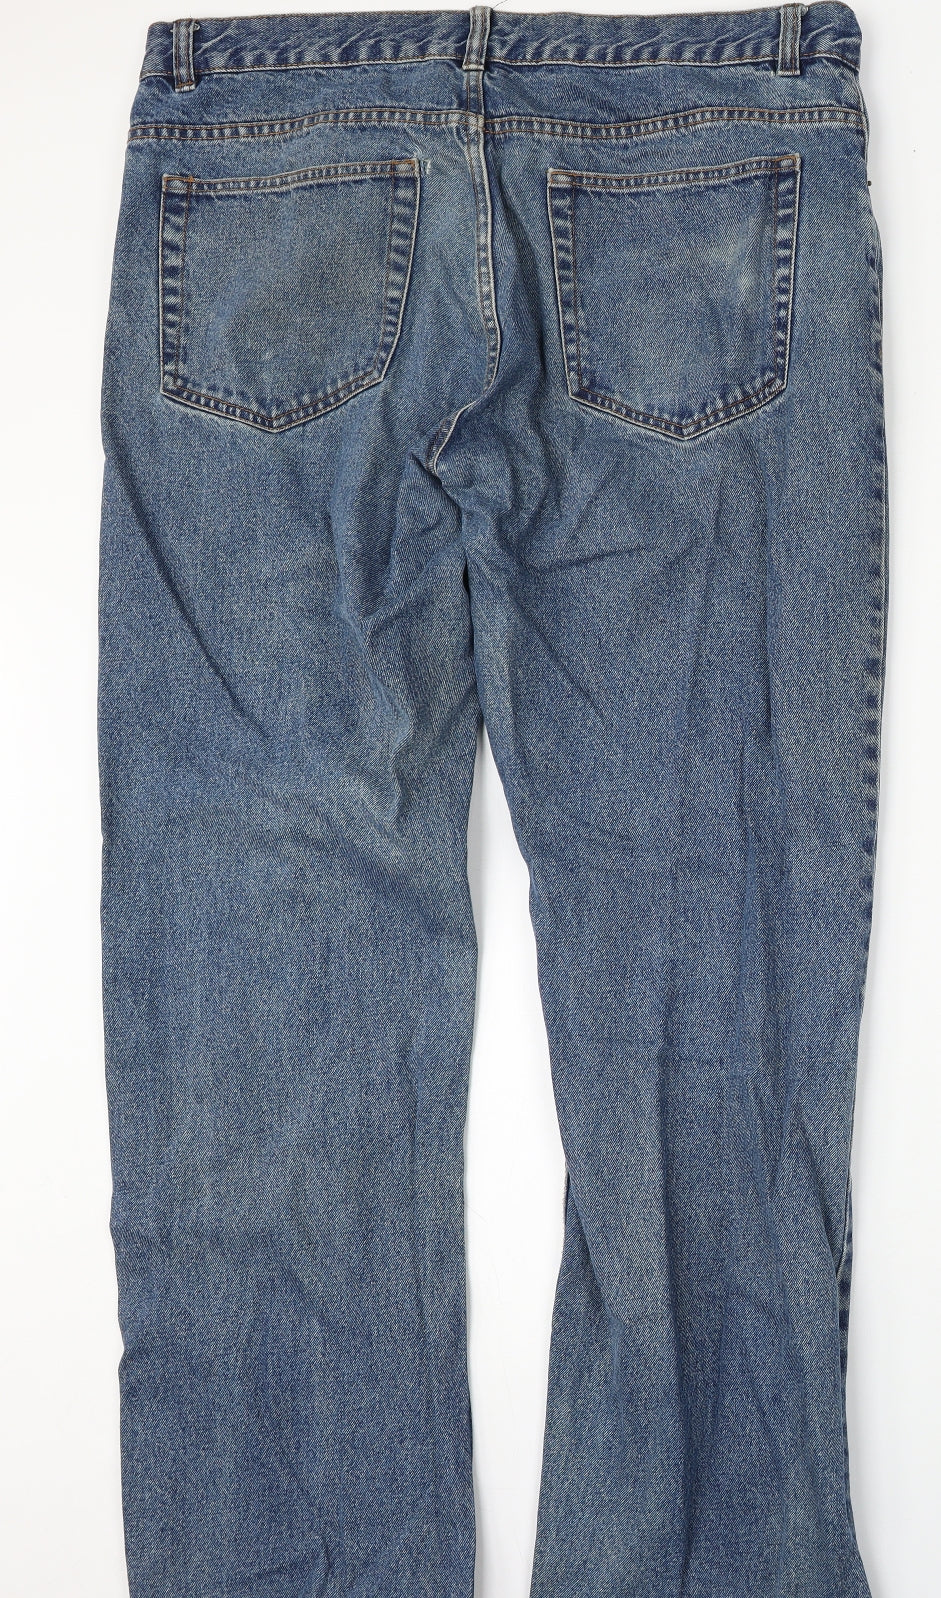 George Men's Bootcut Jeans